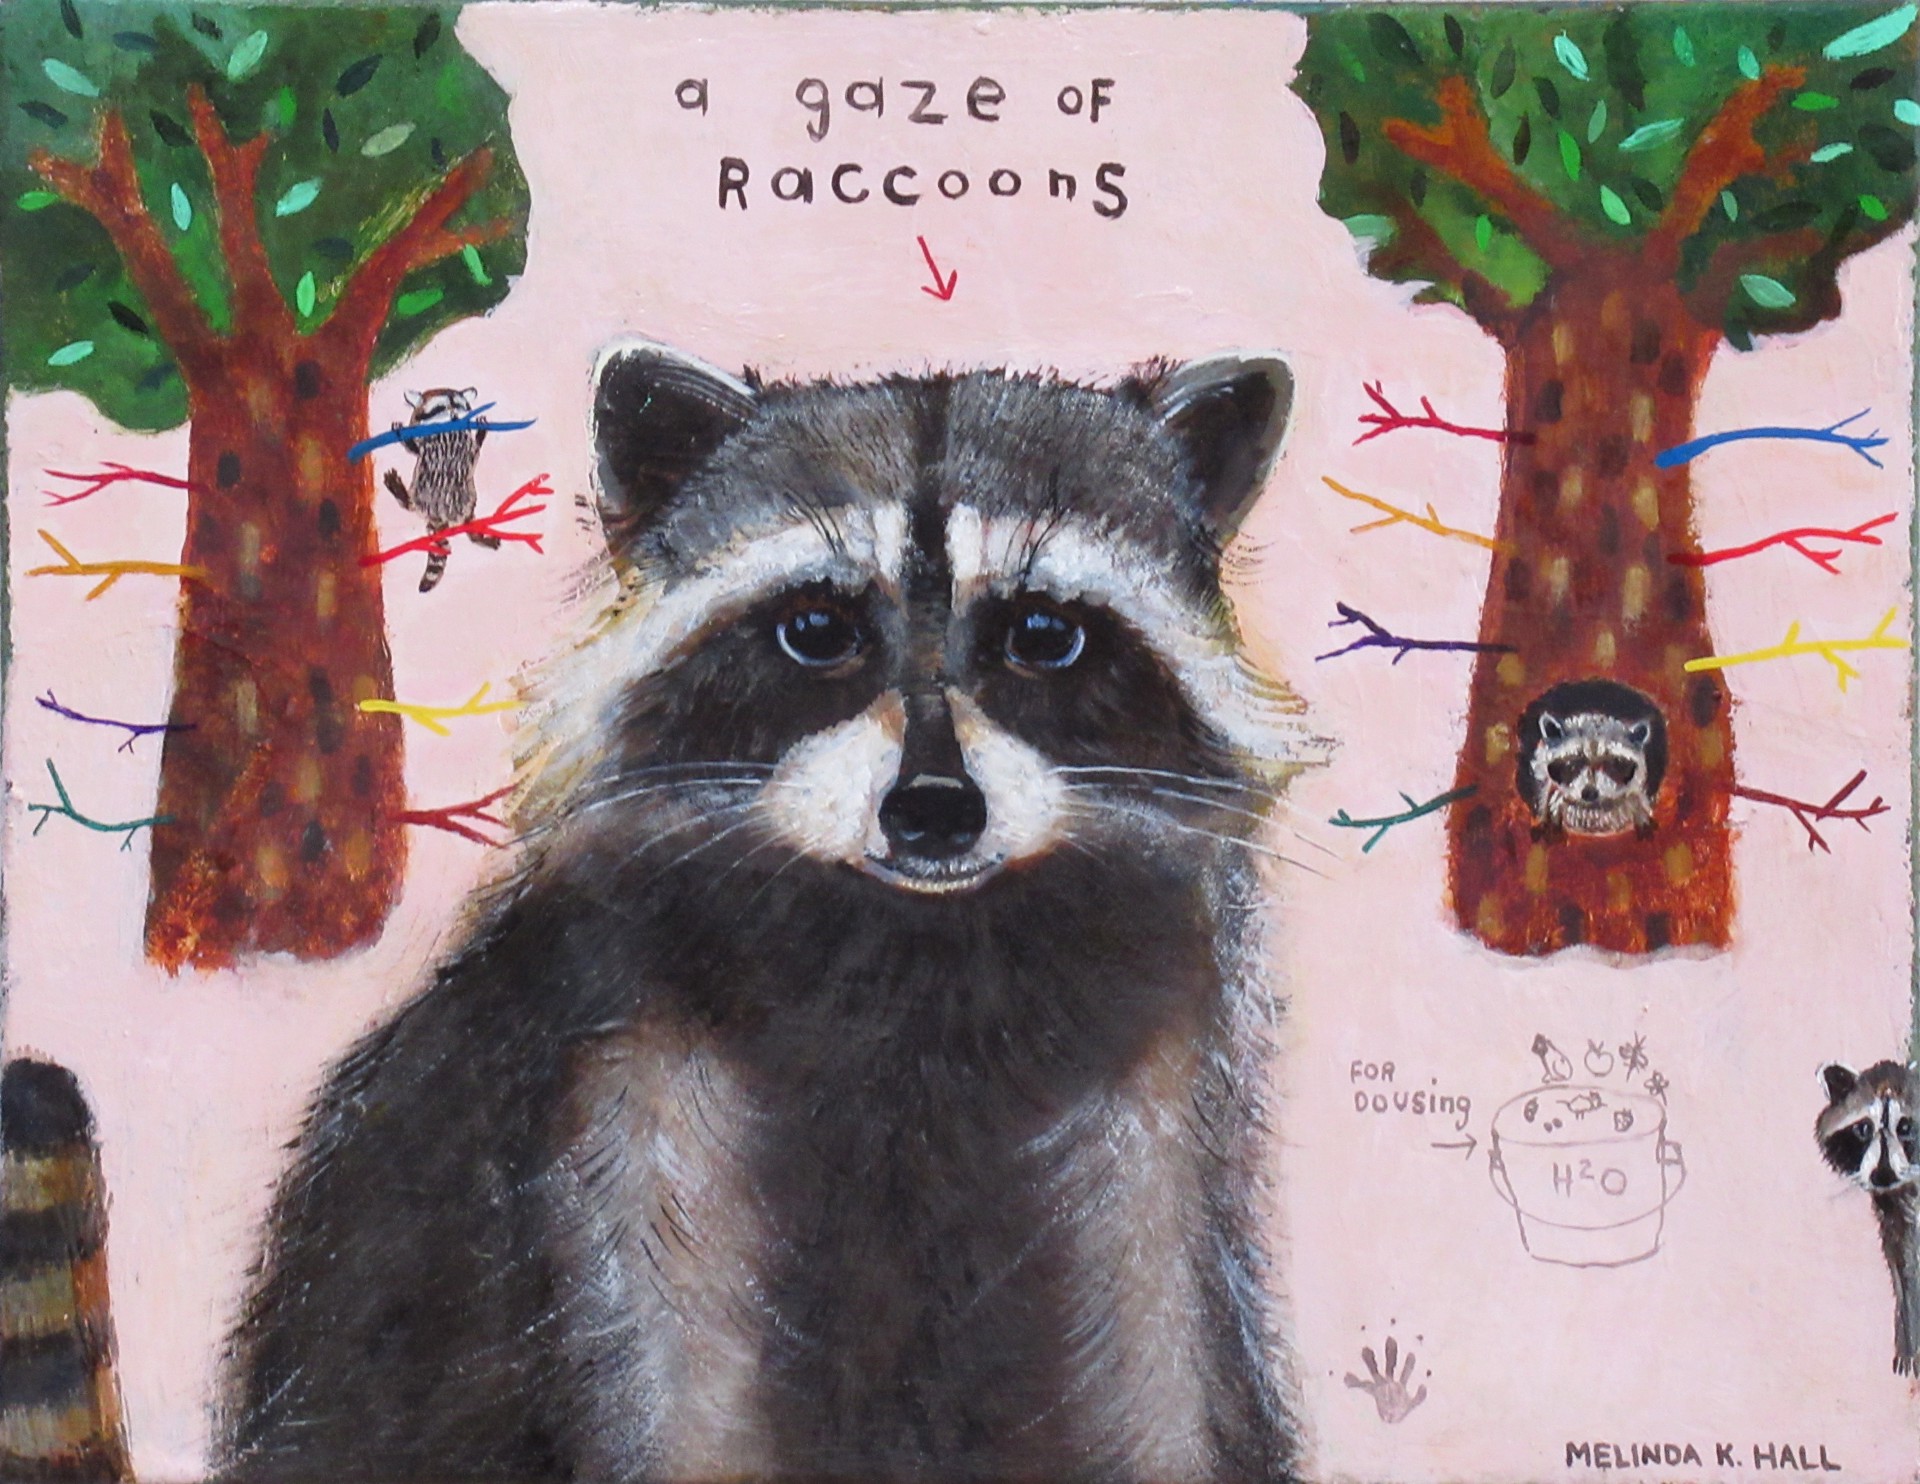 A Gaze of Raccoons by Melinda K. Hall